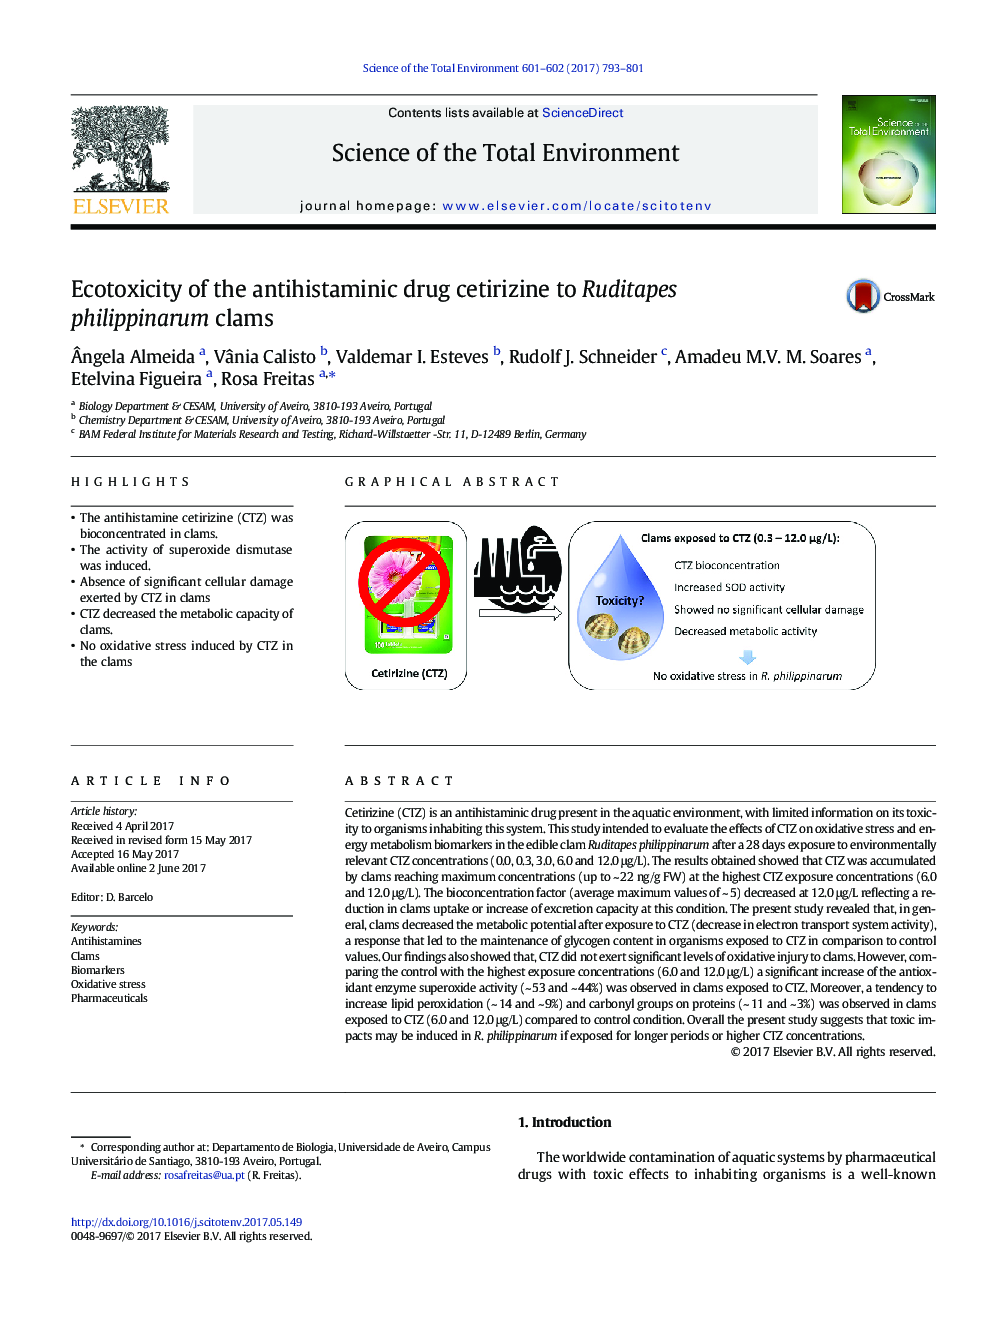 Ecotoxicity of the antihistaminic drug cetirizine to Ruditapes philippinarum clams